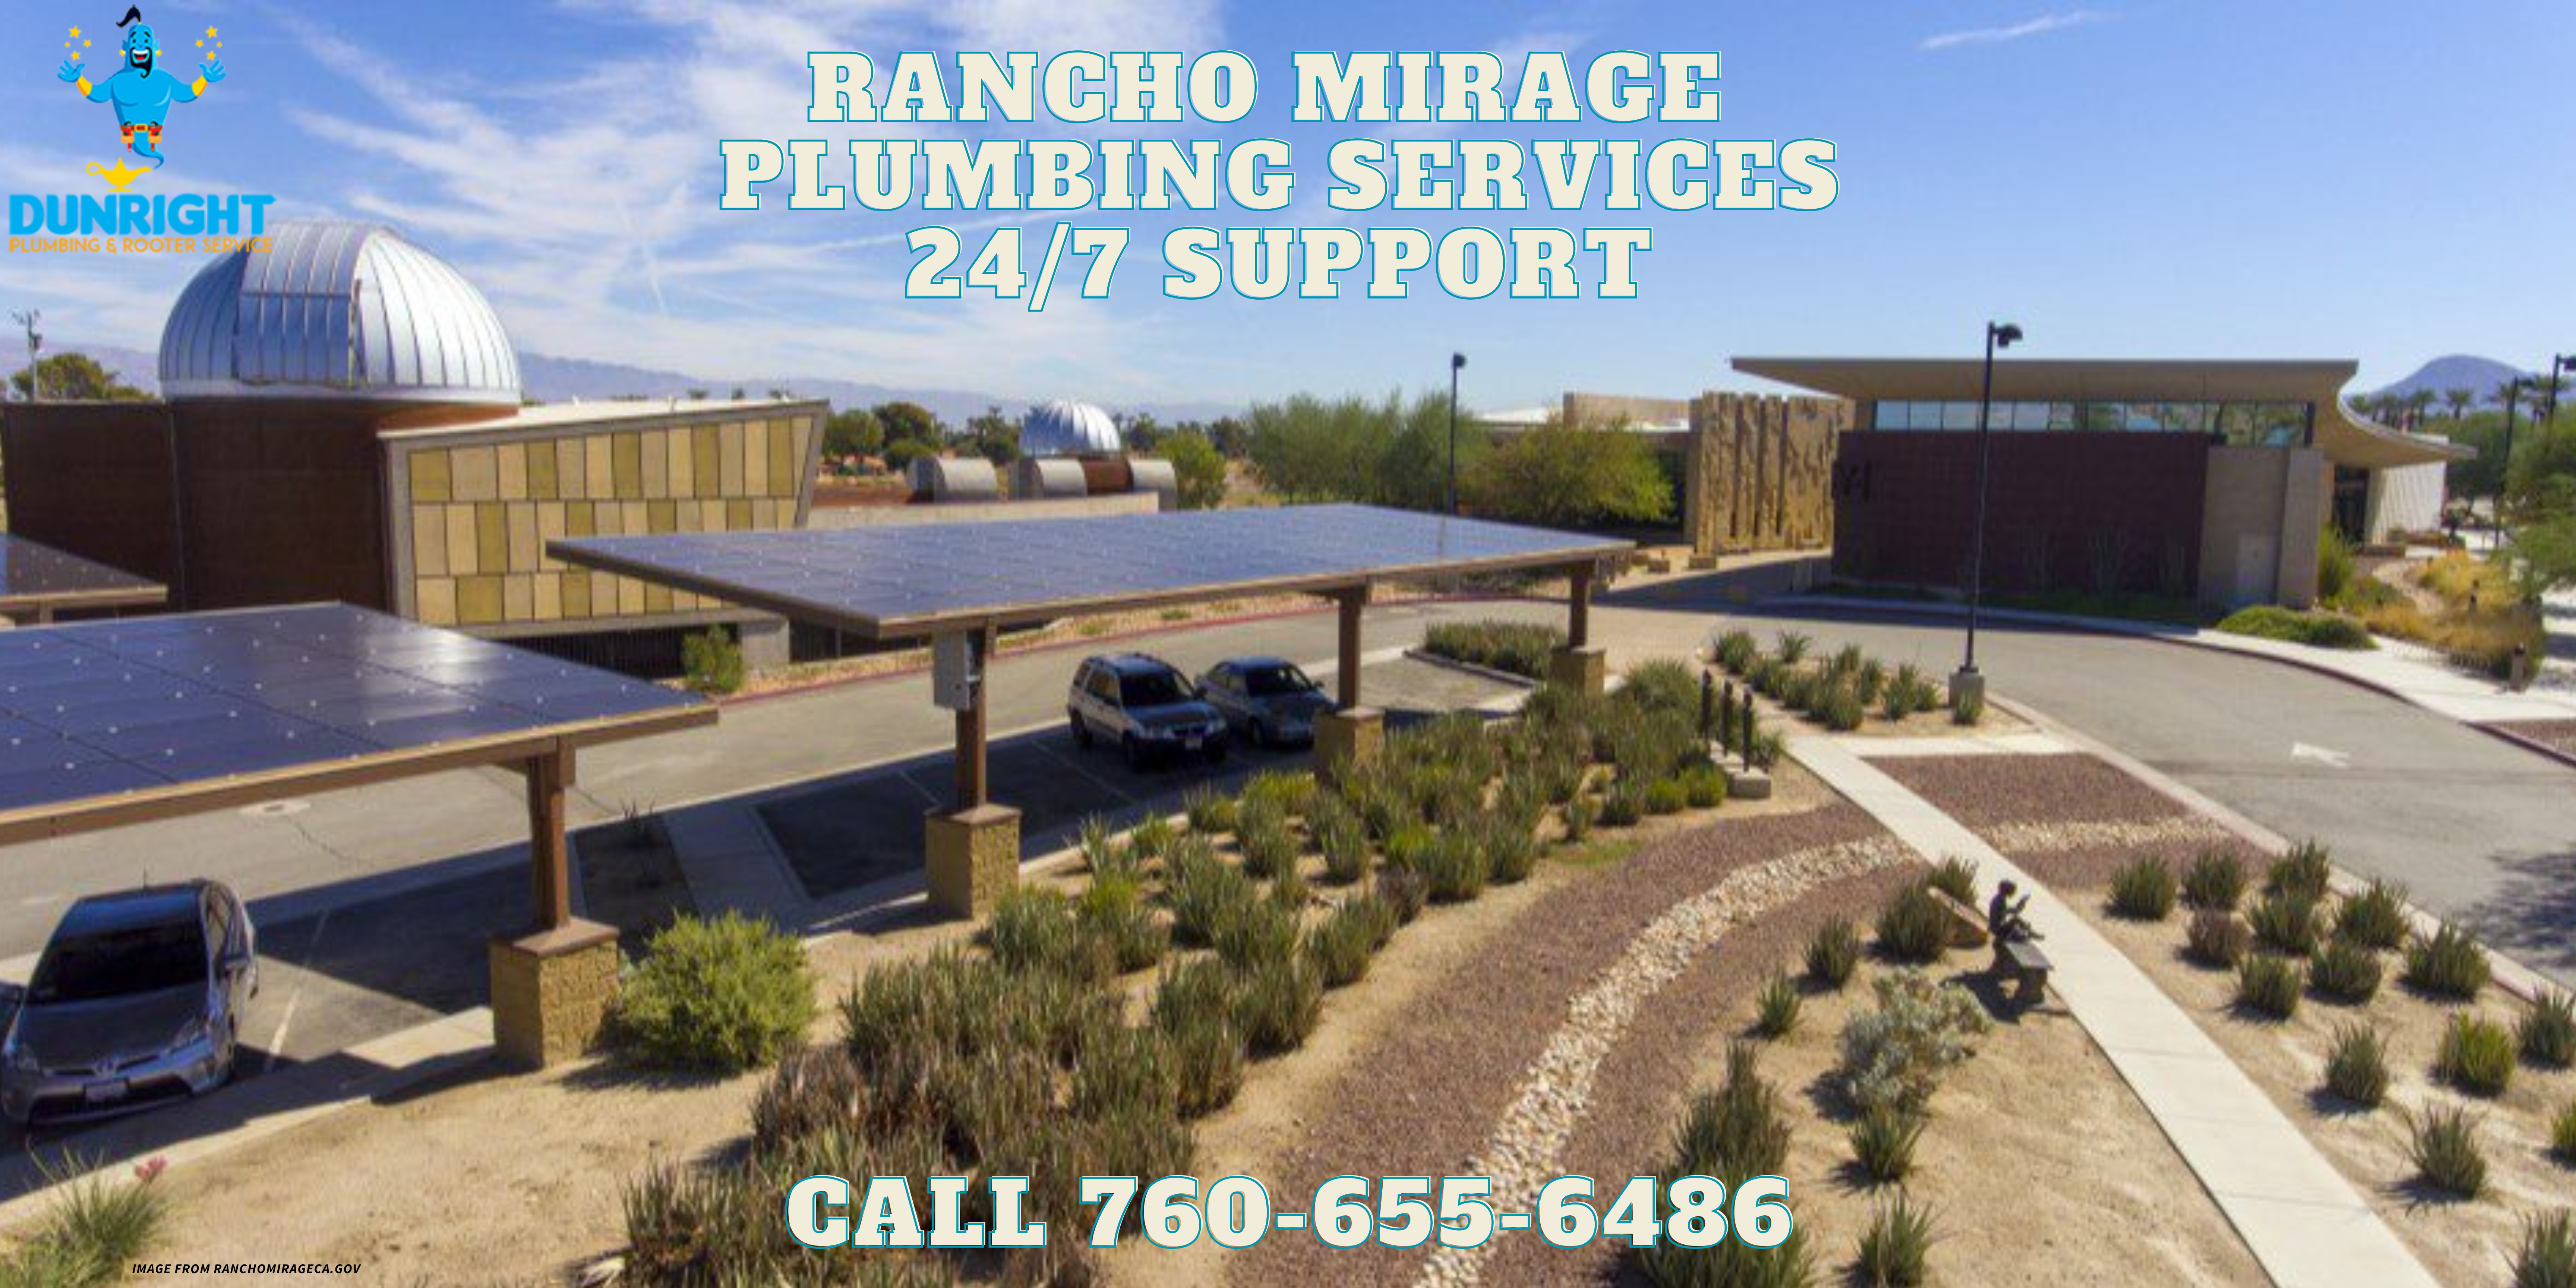 Rancho Mirage Plumbing Services